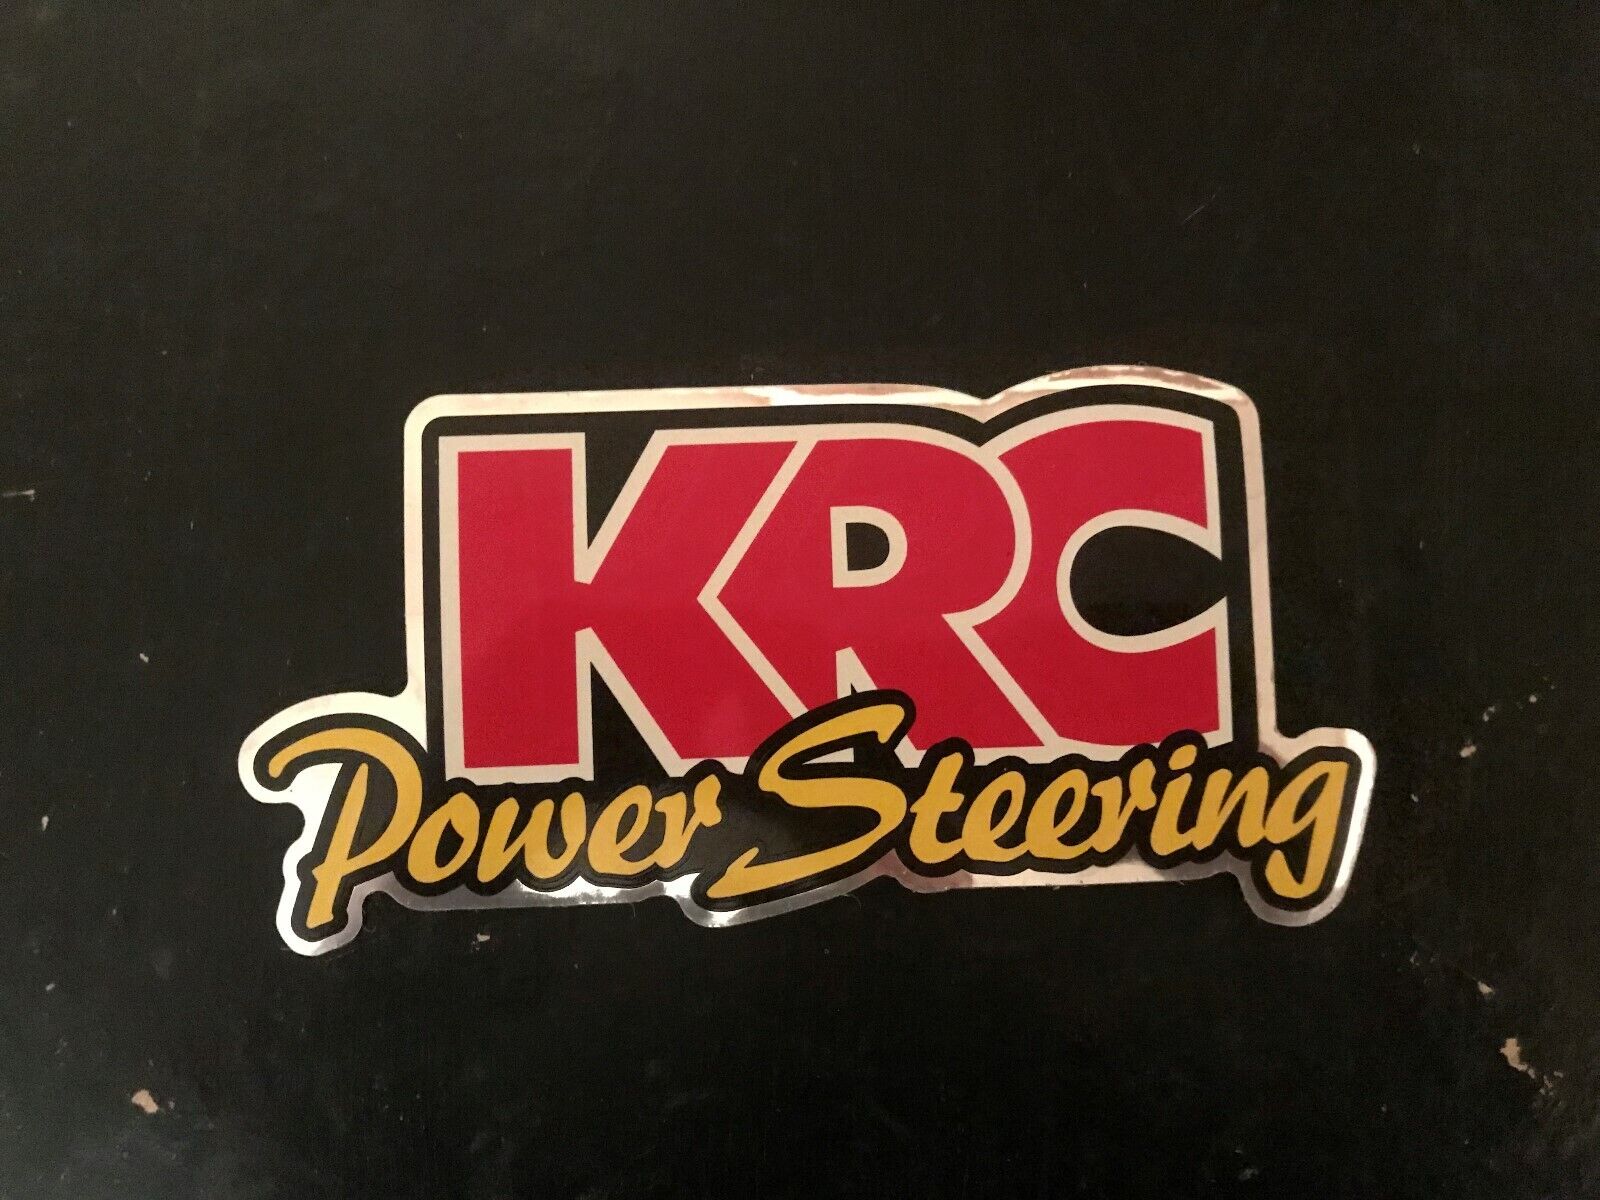 KRC Power Steering decal sticker nascar hot rod arca tilton nhra racing race car